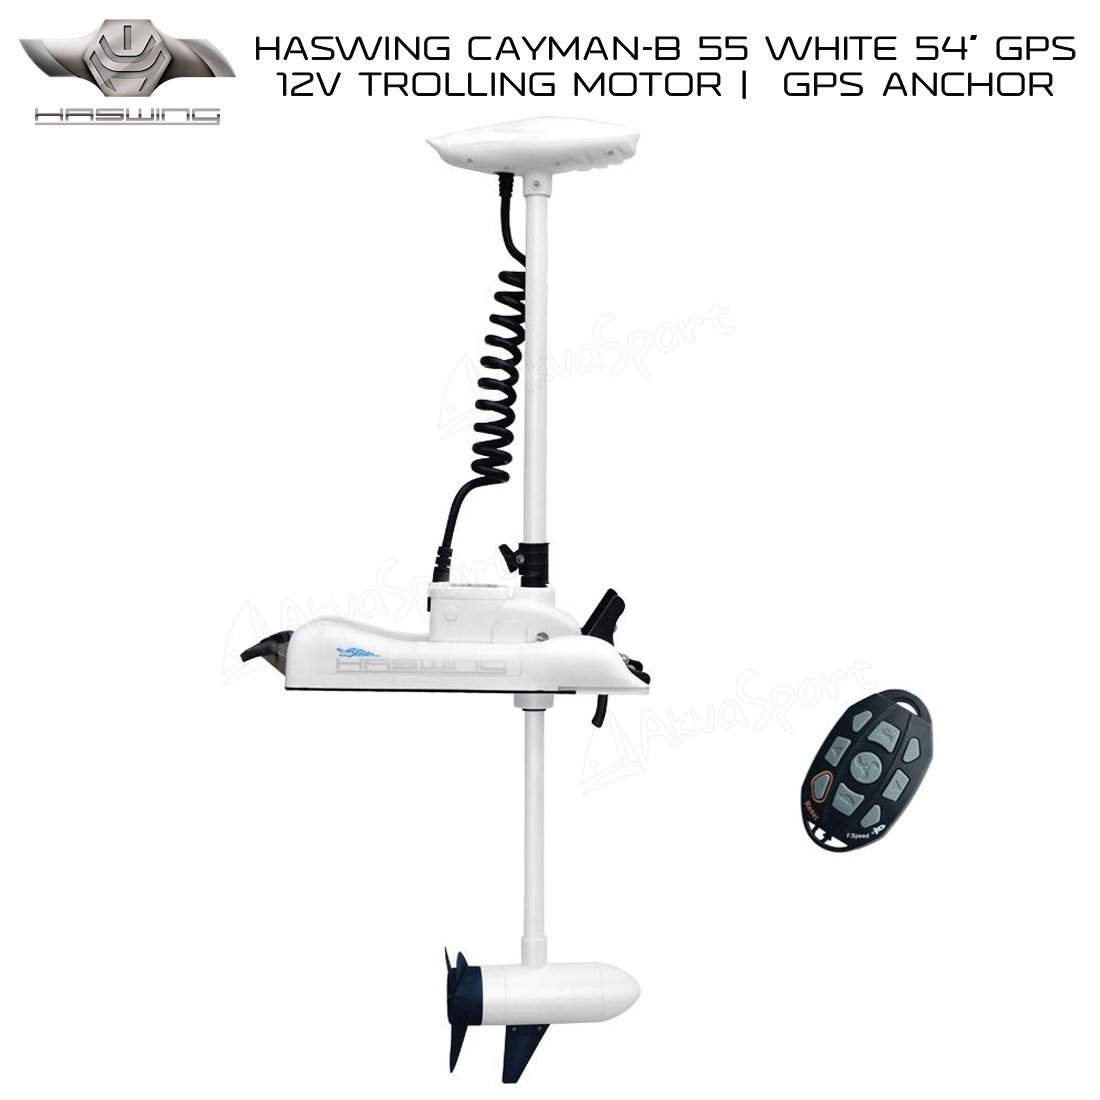 Haswing Cayman B GPS 55lbs 54